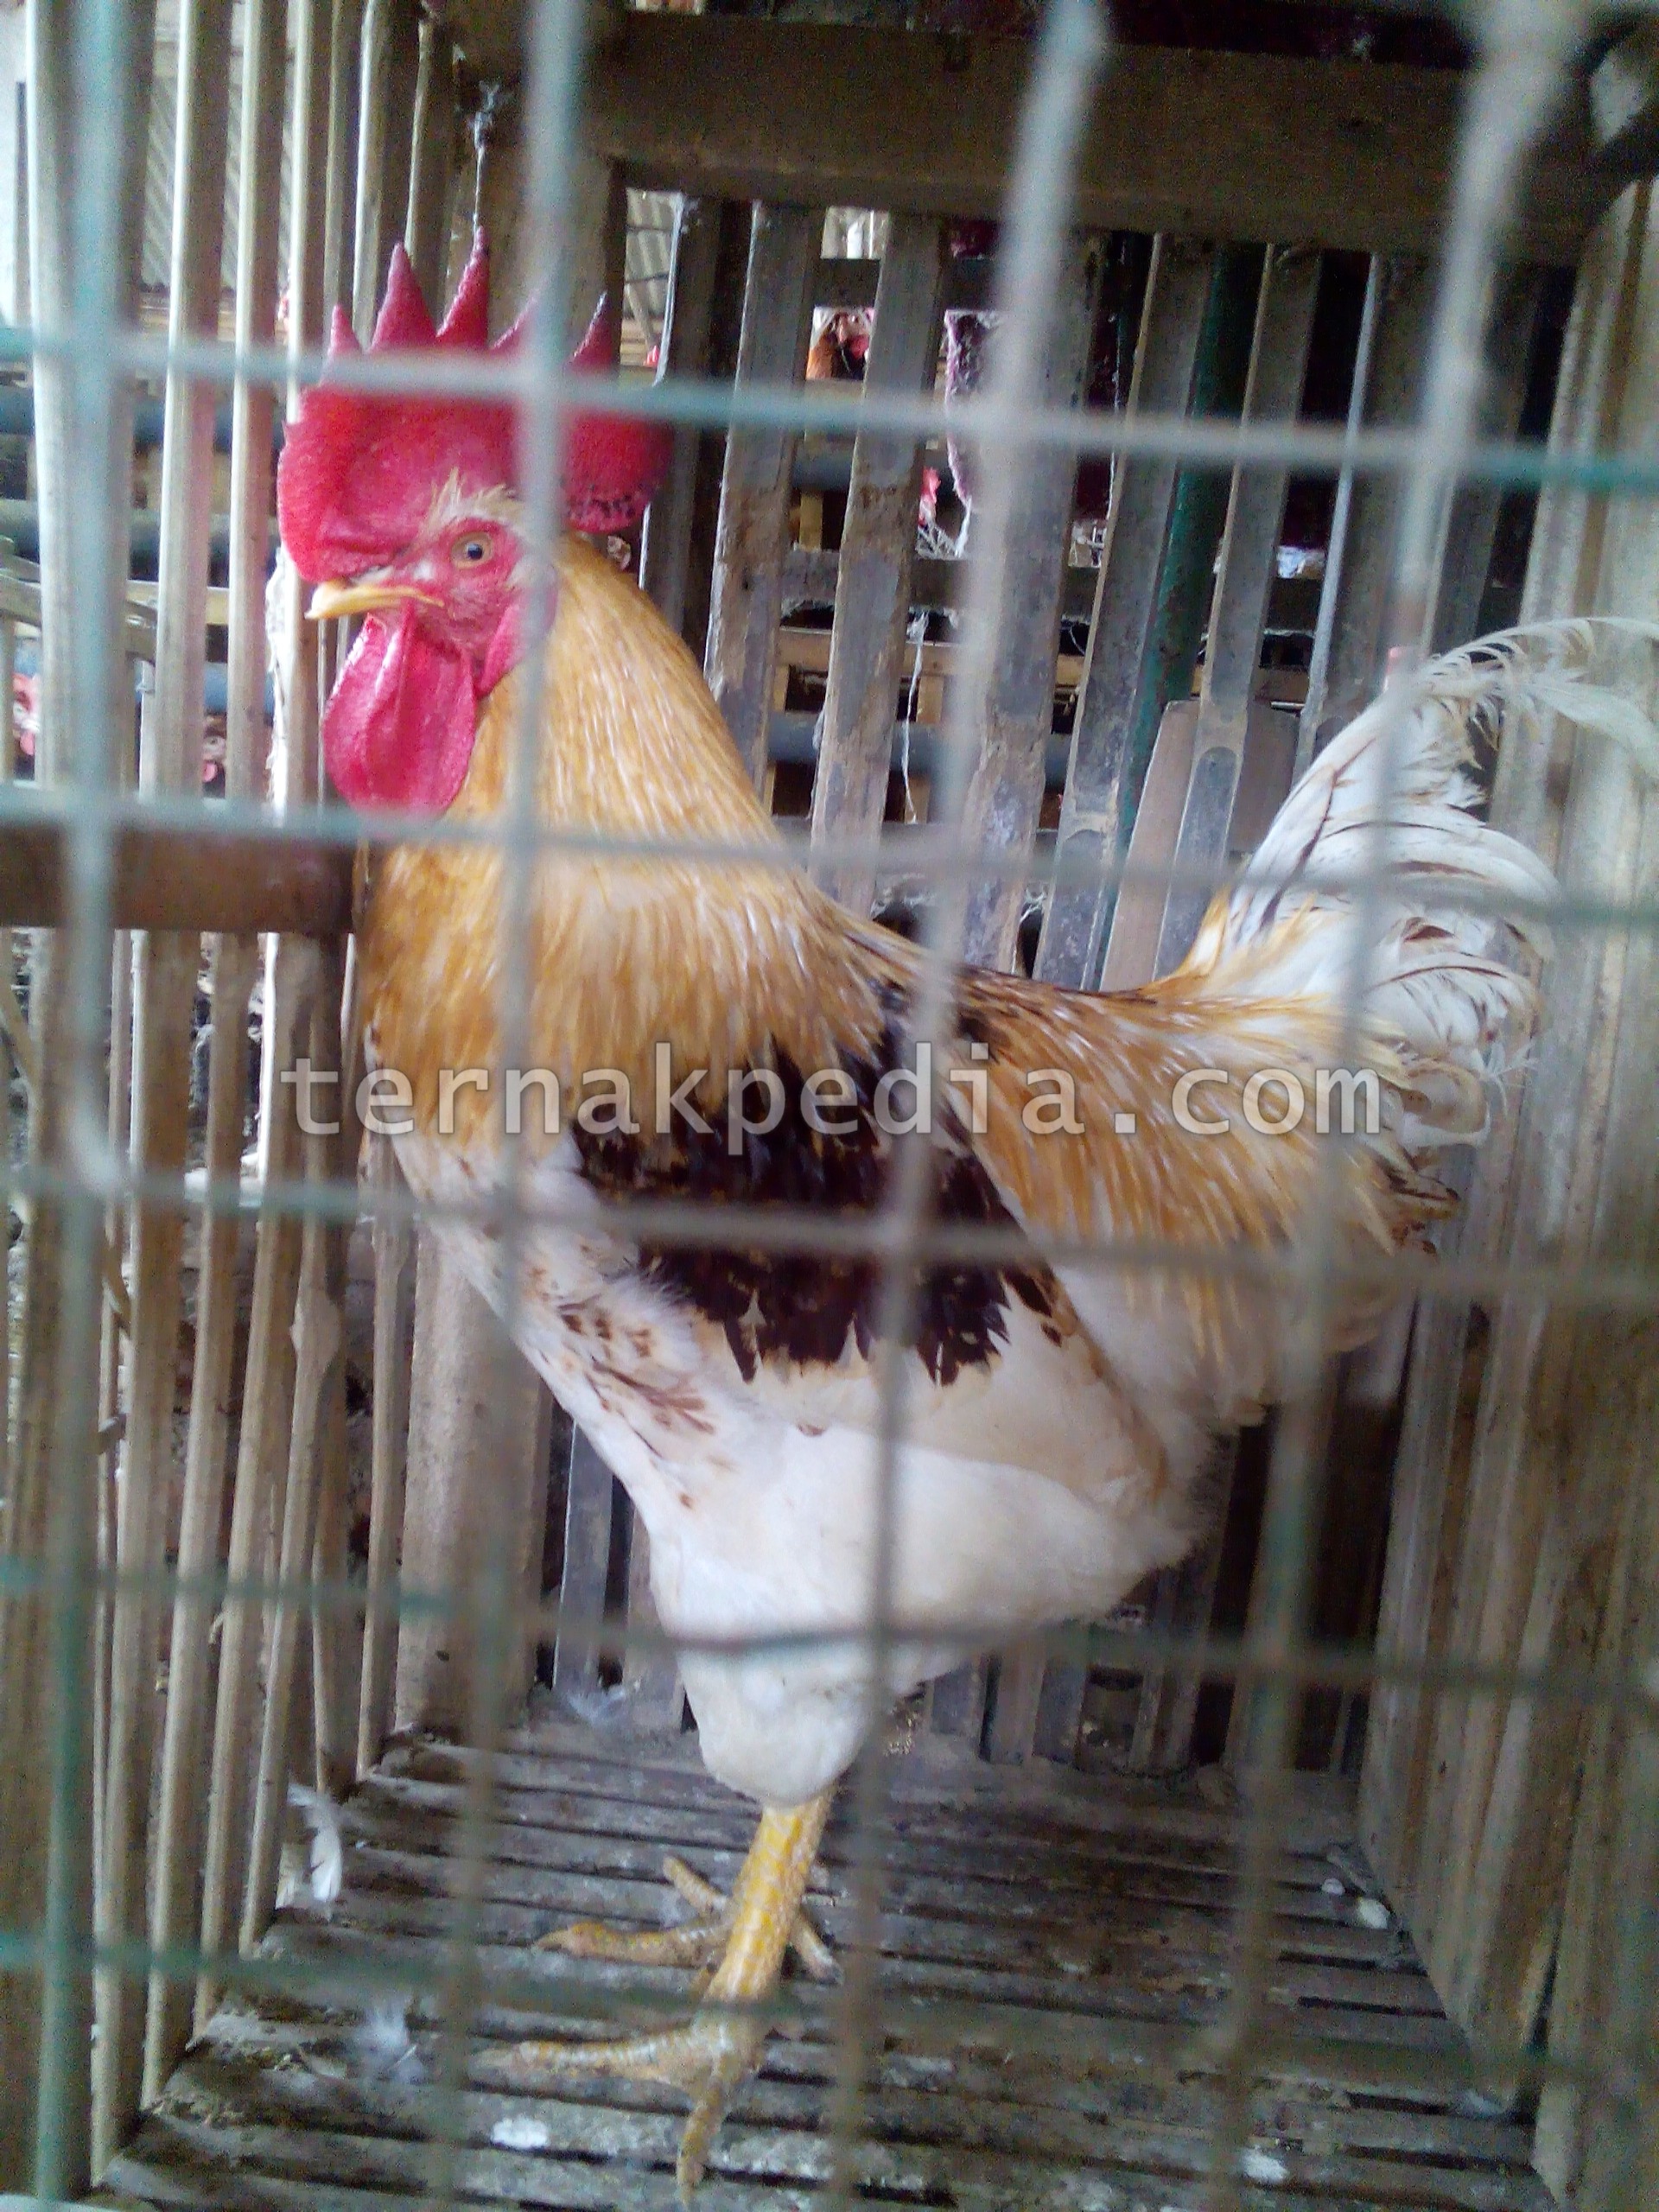 Memperoleh Ayam Jantan Saat Membeli Anakan Ayam Petelur Ternakpedia